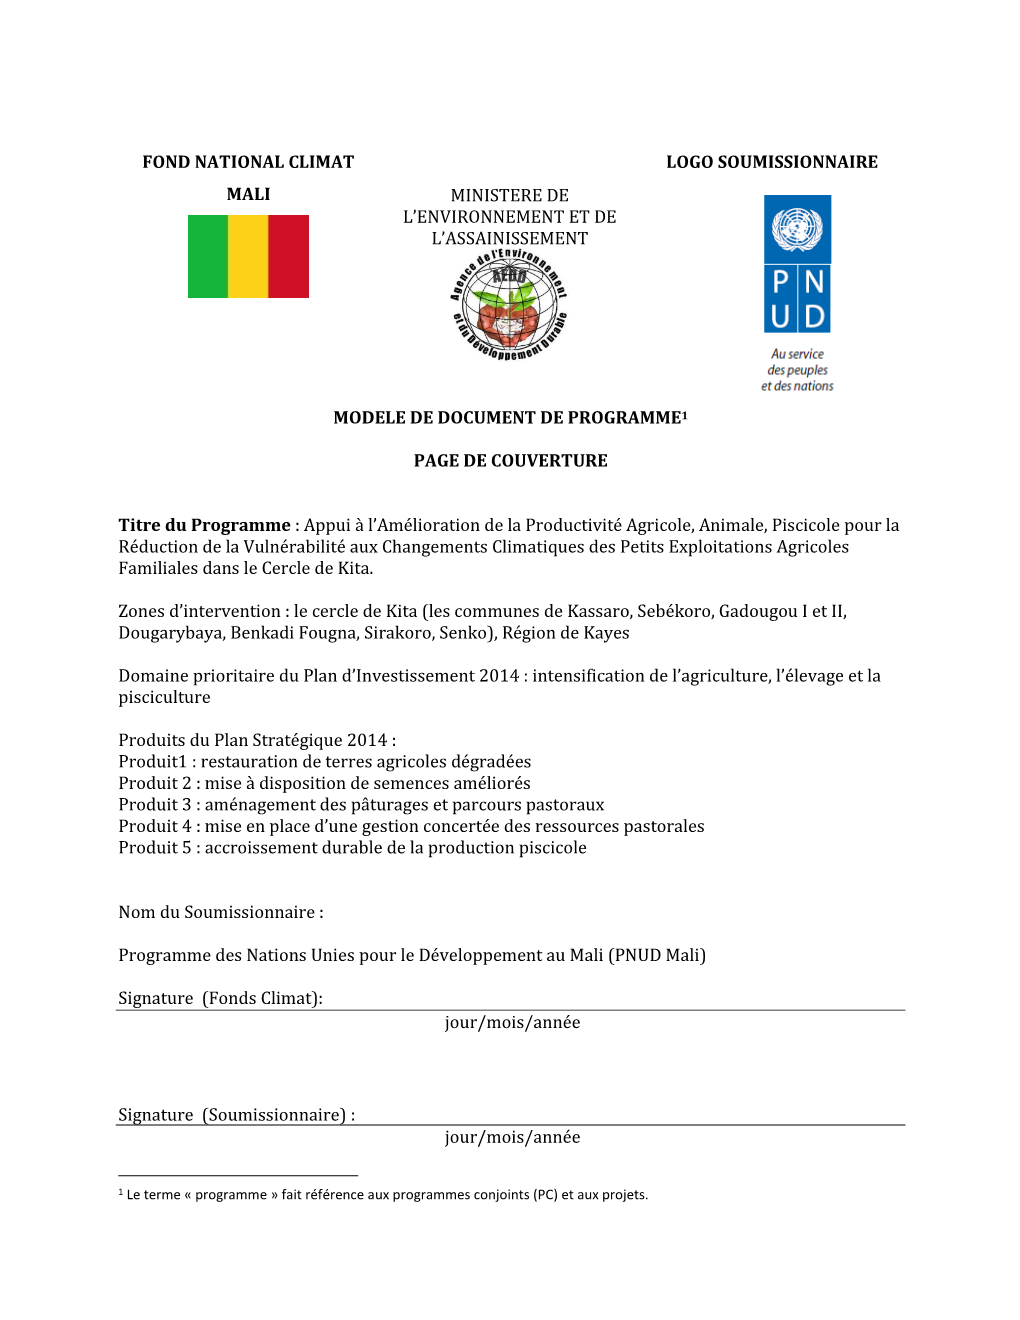 Fond National Climat Mali Ministere De L